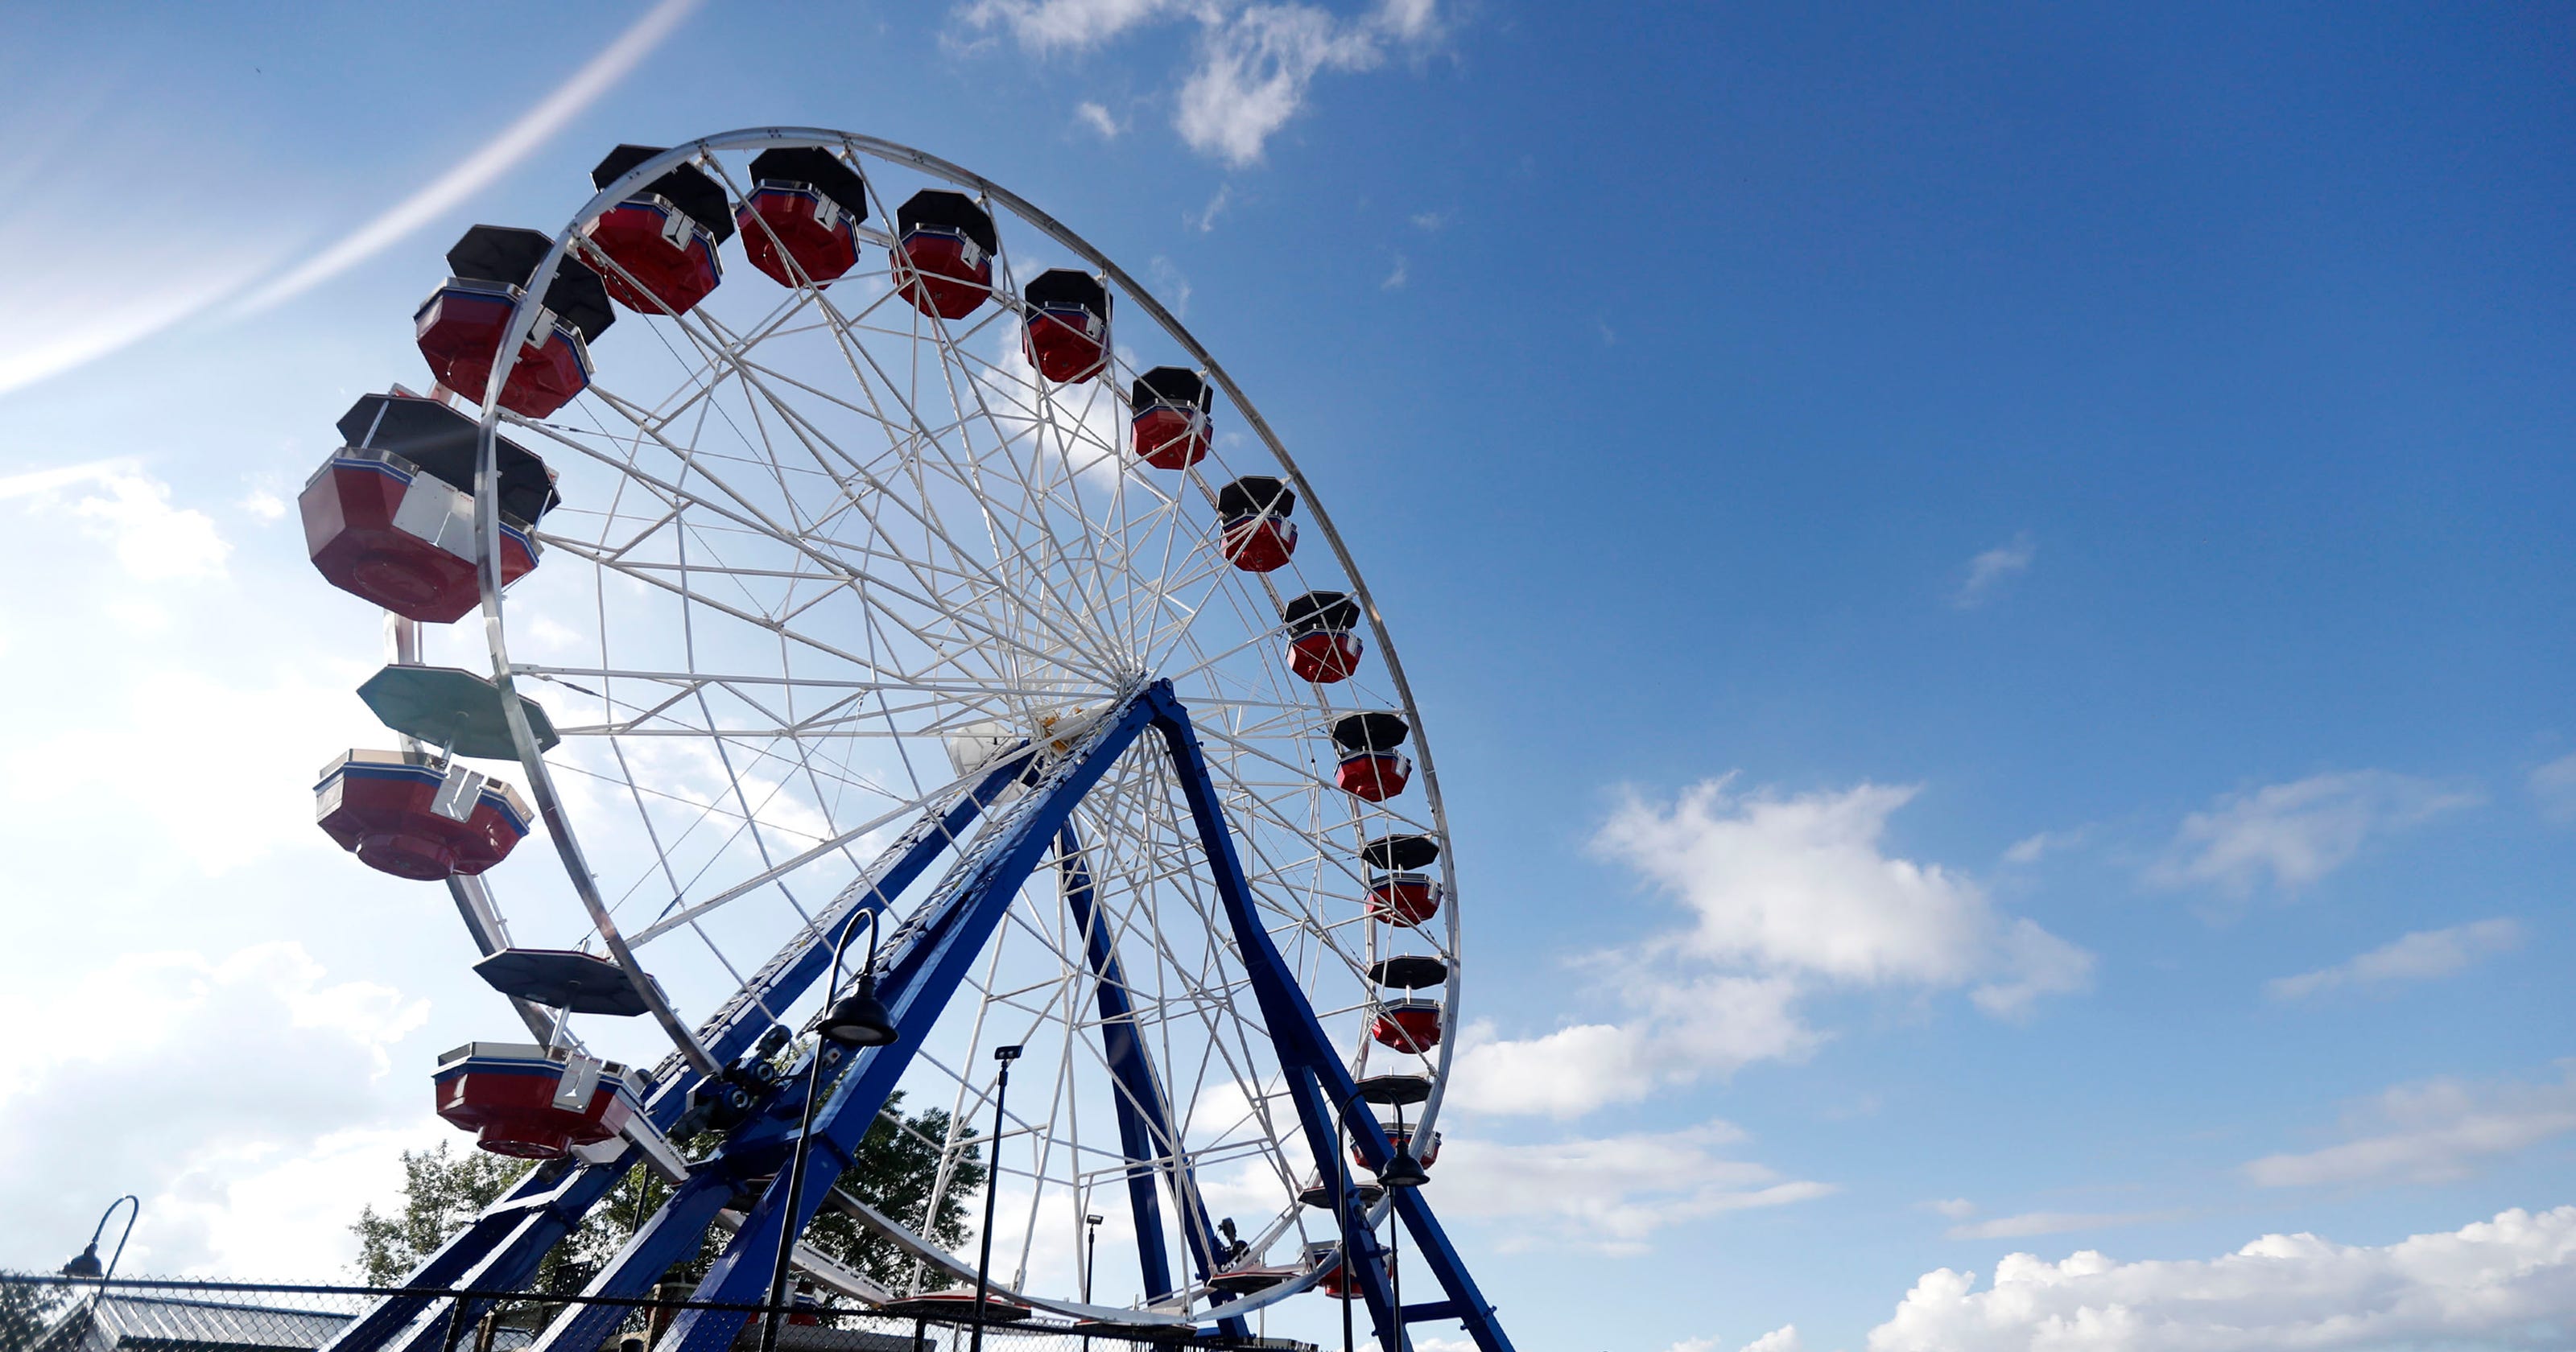 Bay Beach Amusement Park offers first rides on new 100foot Ferris wheel